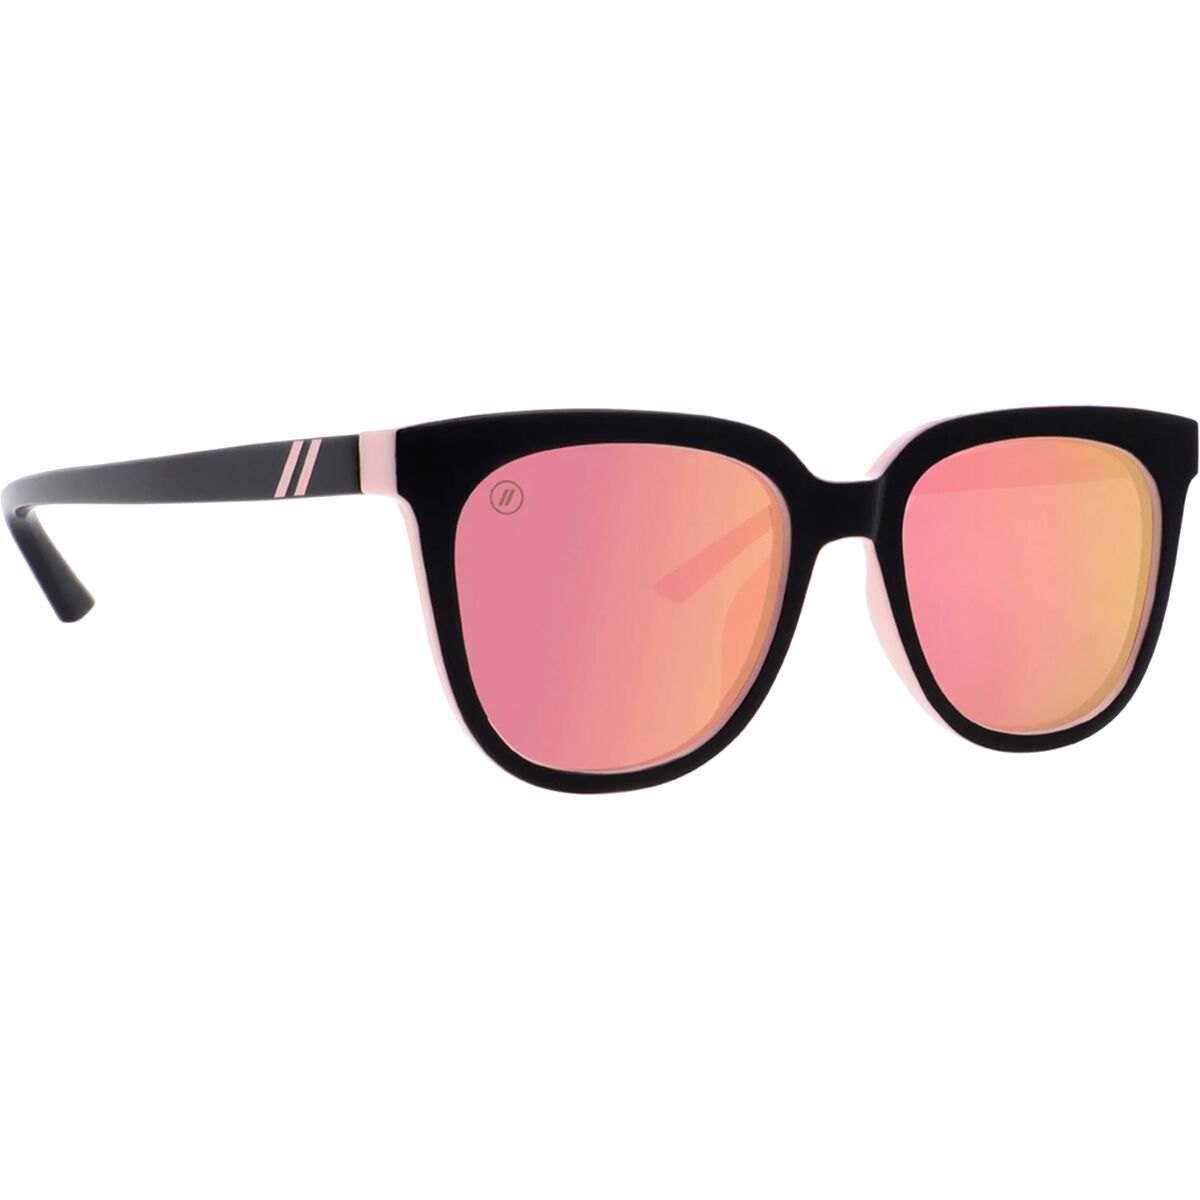 Blenders Eyewear Atlantis Rose Grove Polarized Sunglasses